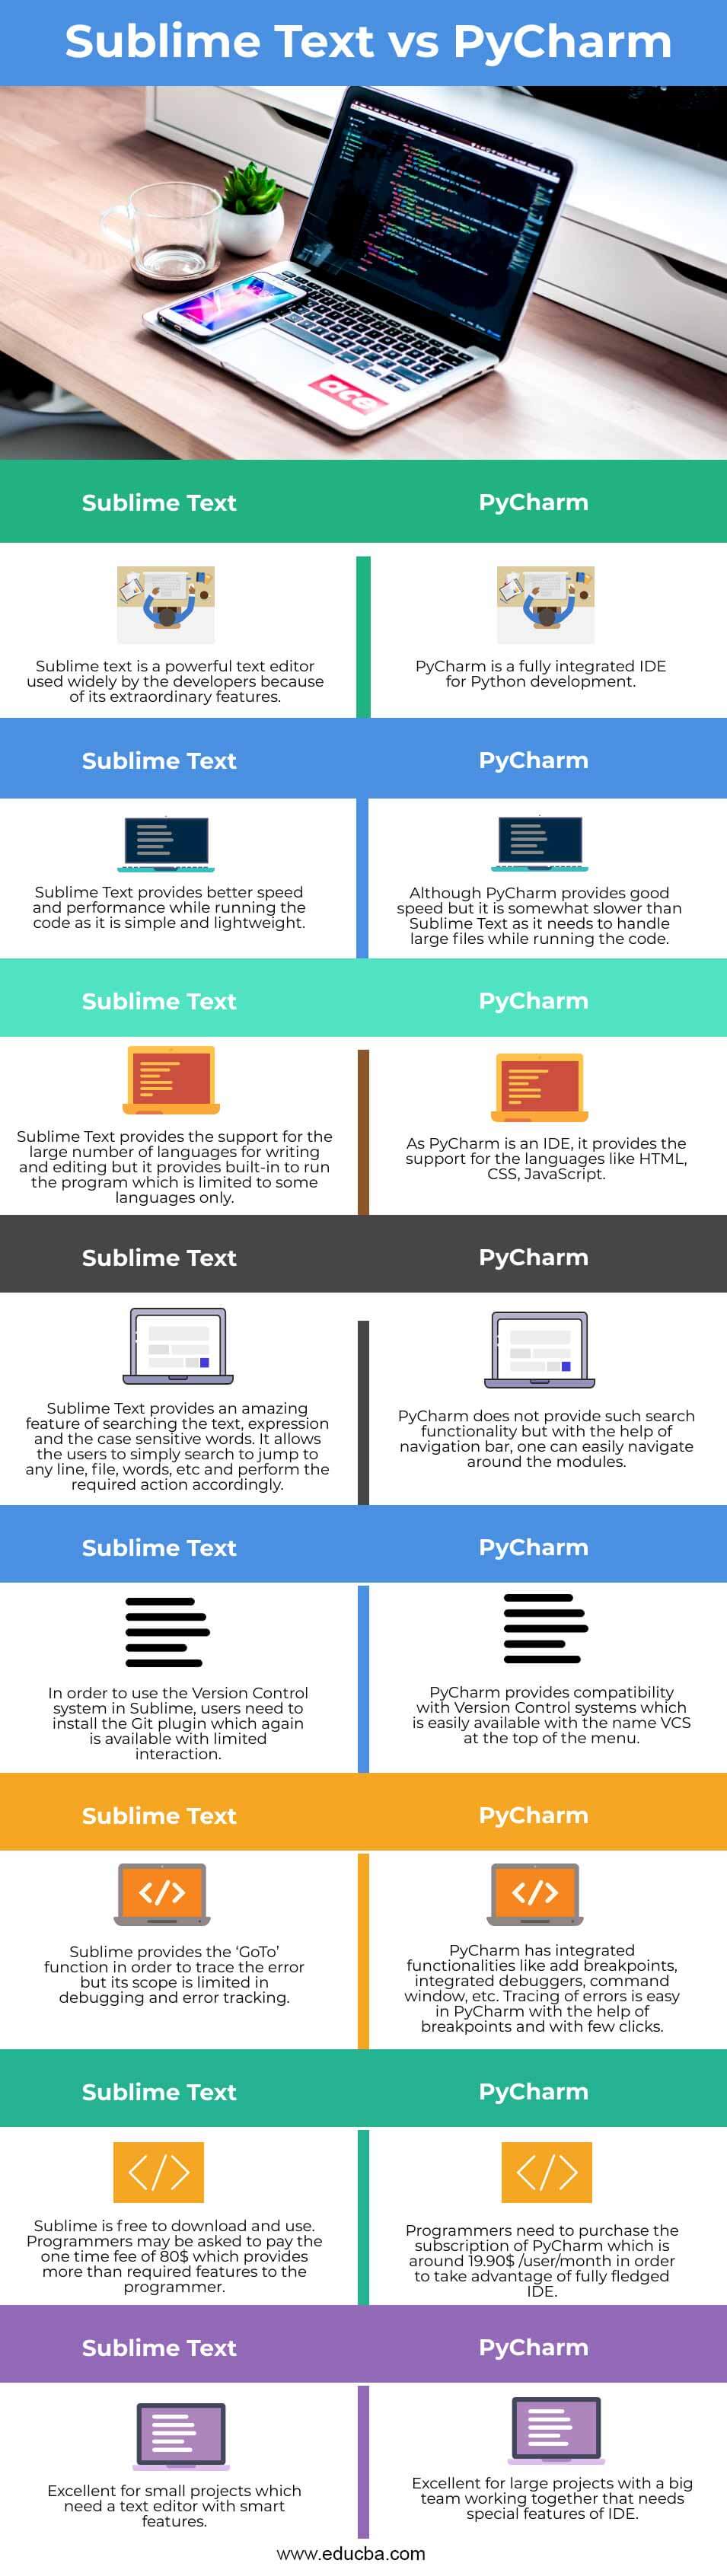 Sublime-Text-vs-PyCharm-info